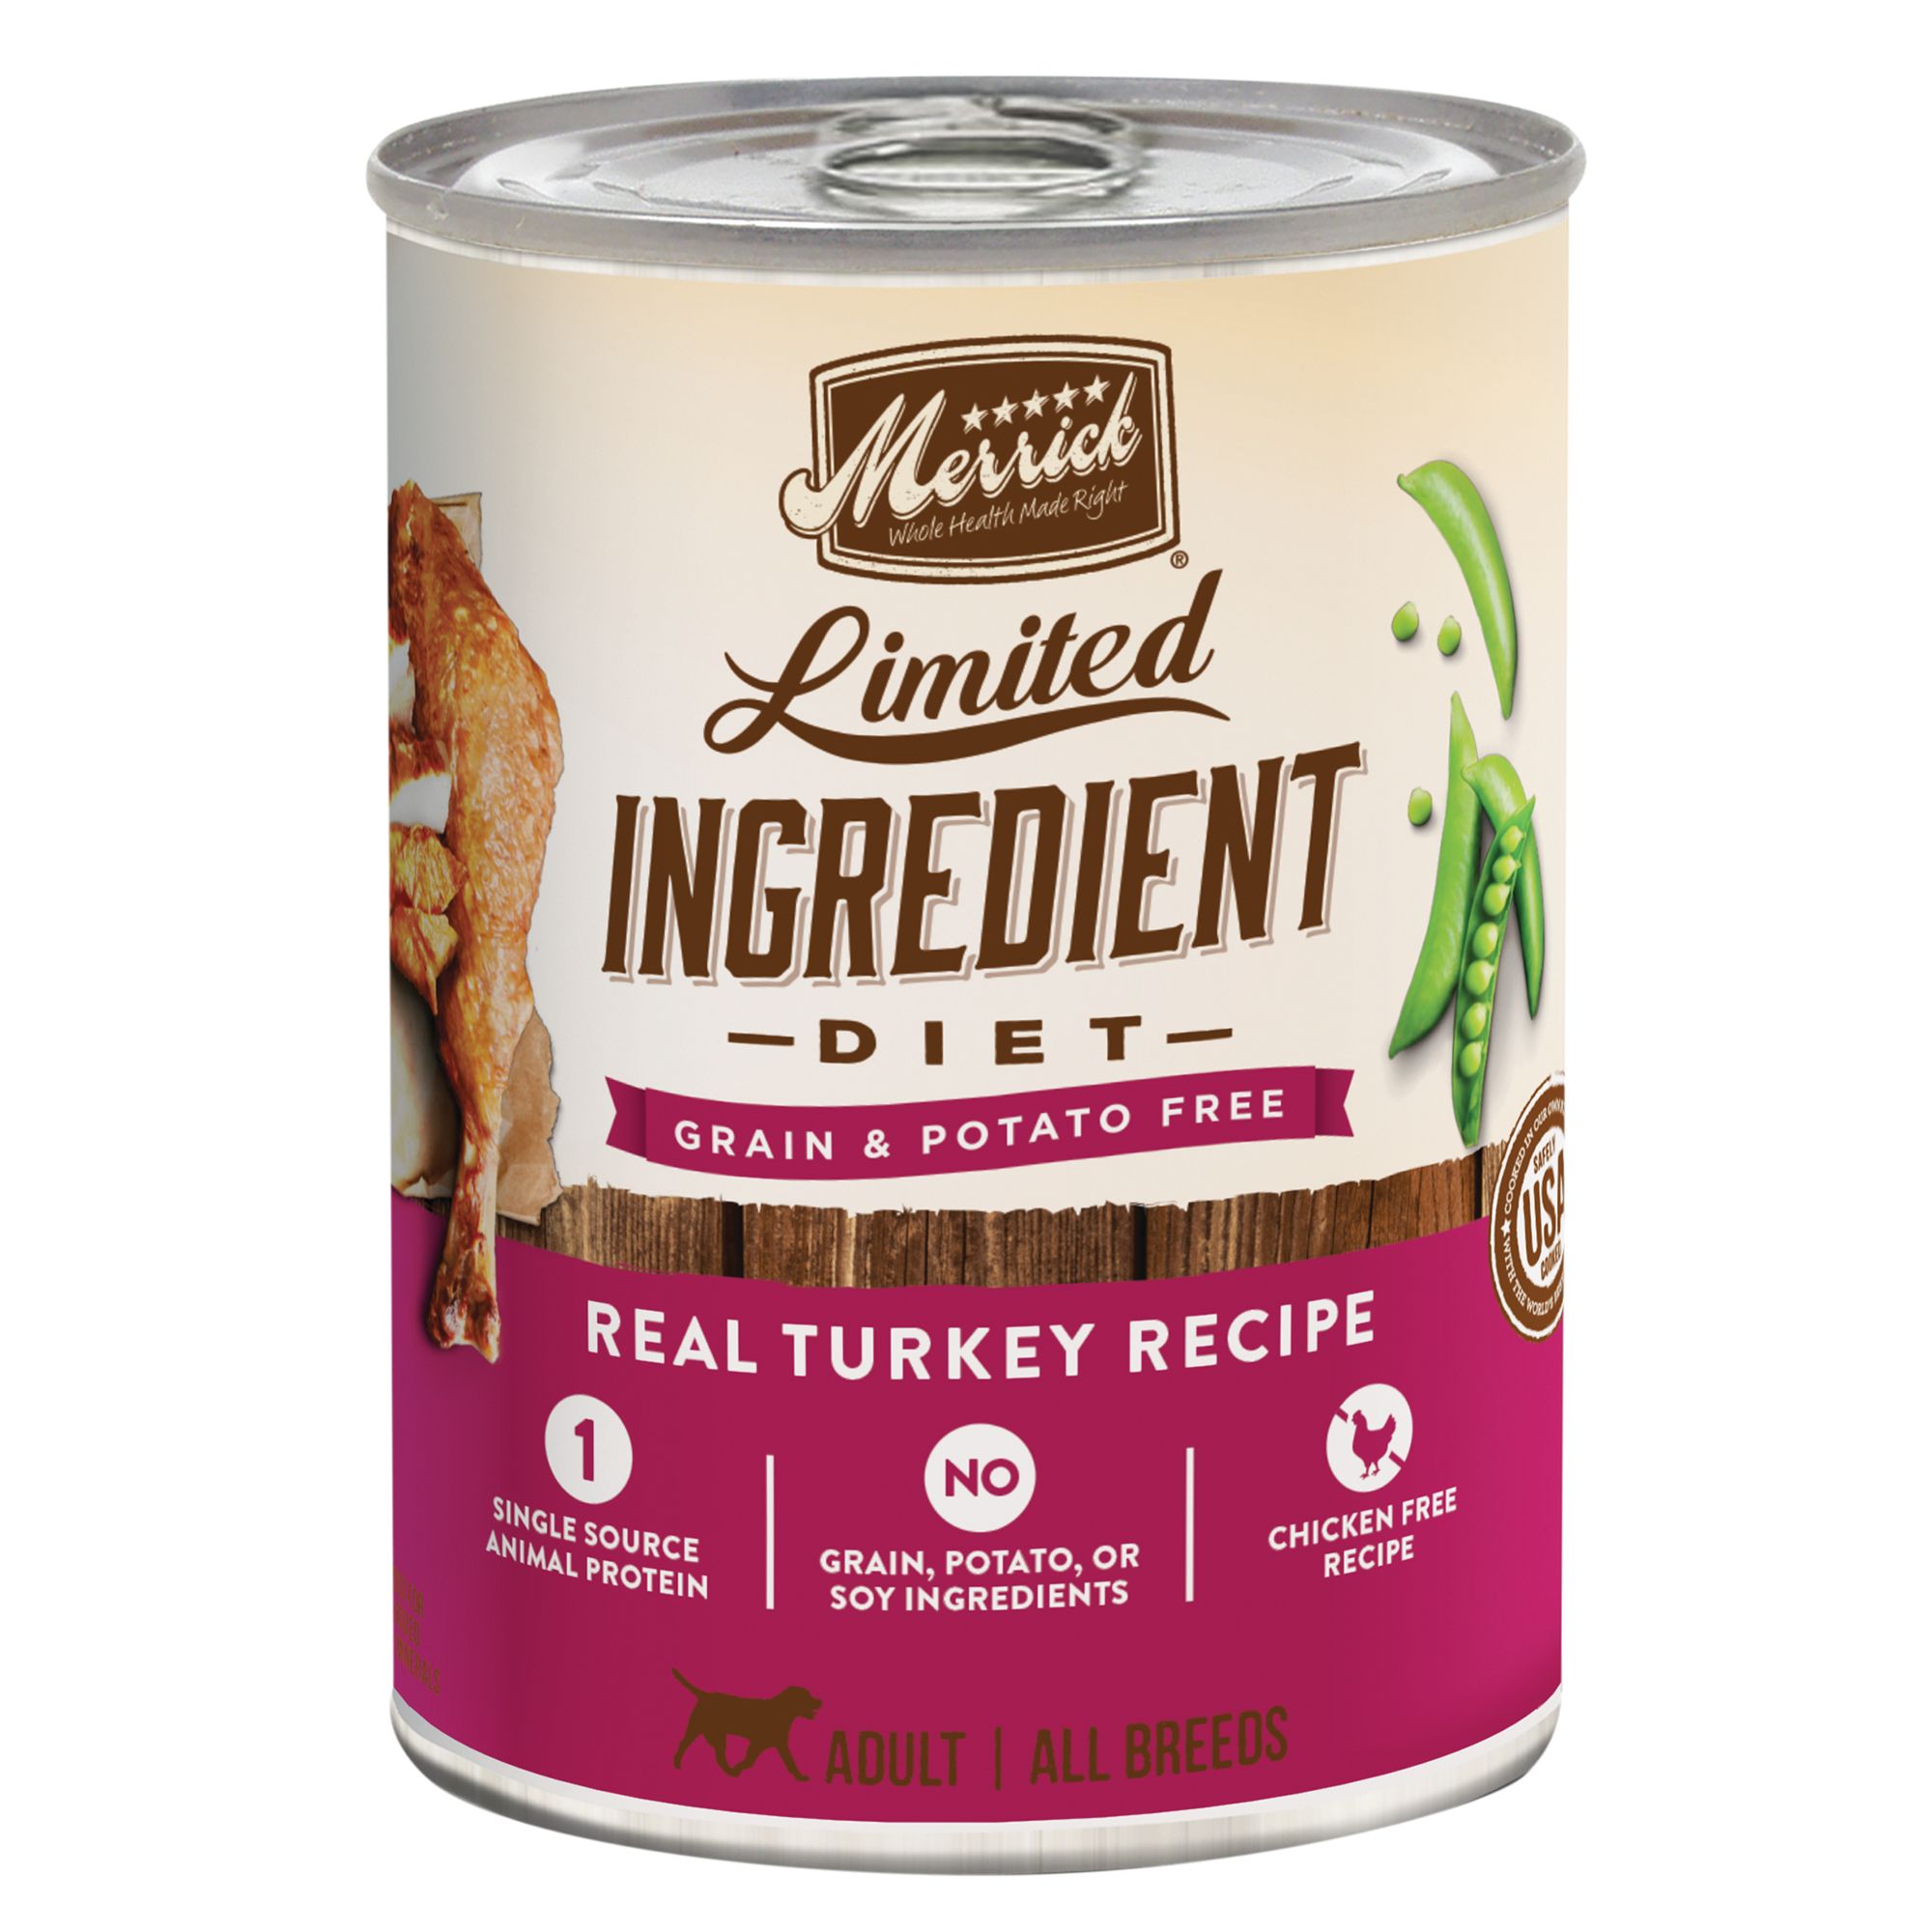 Merrick Limited Ingrediet Diet Adult Dog Food Natural Grain Free Dog Canned Food Petsmart